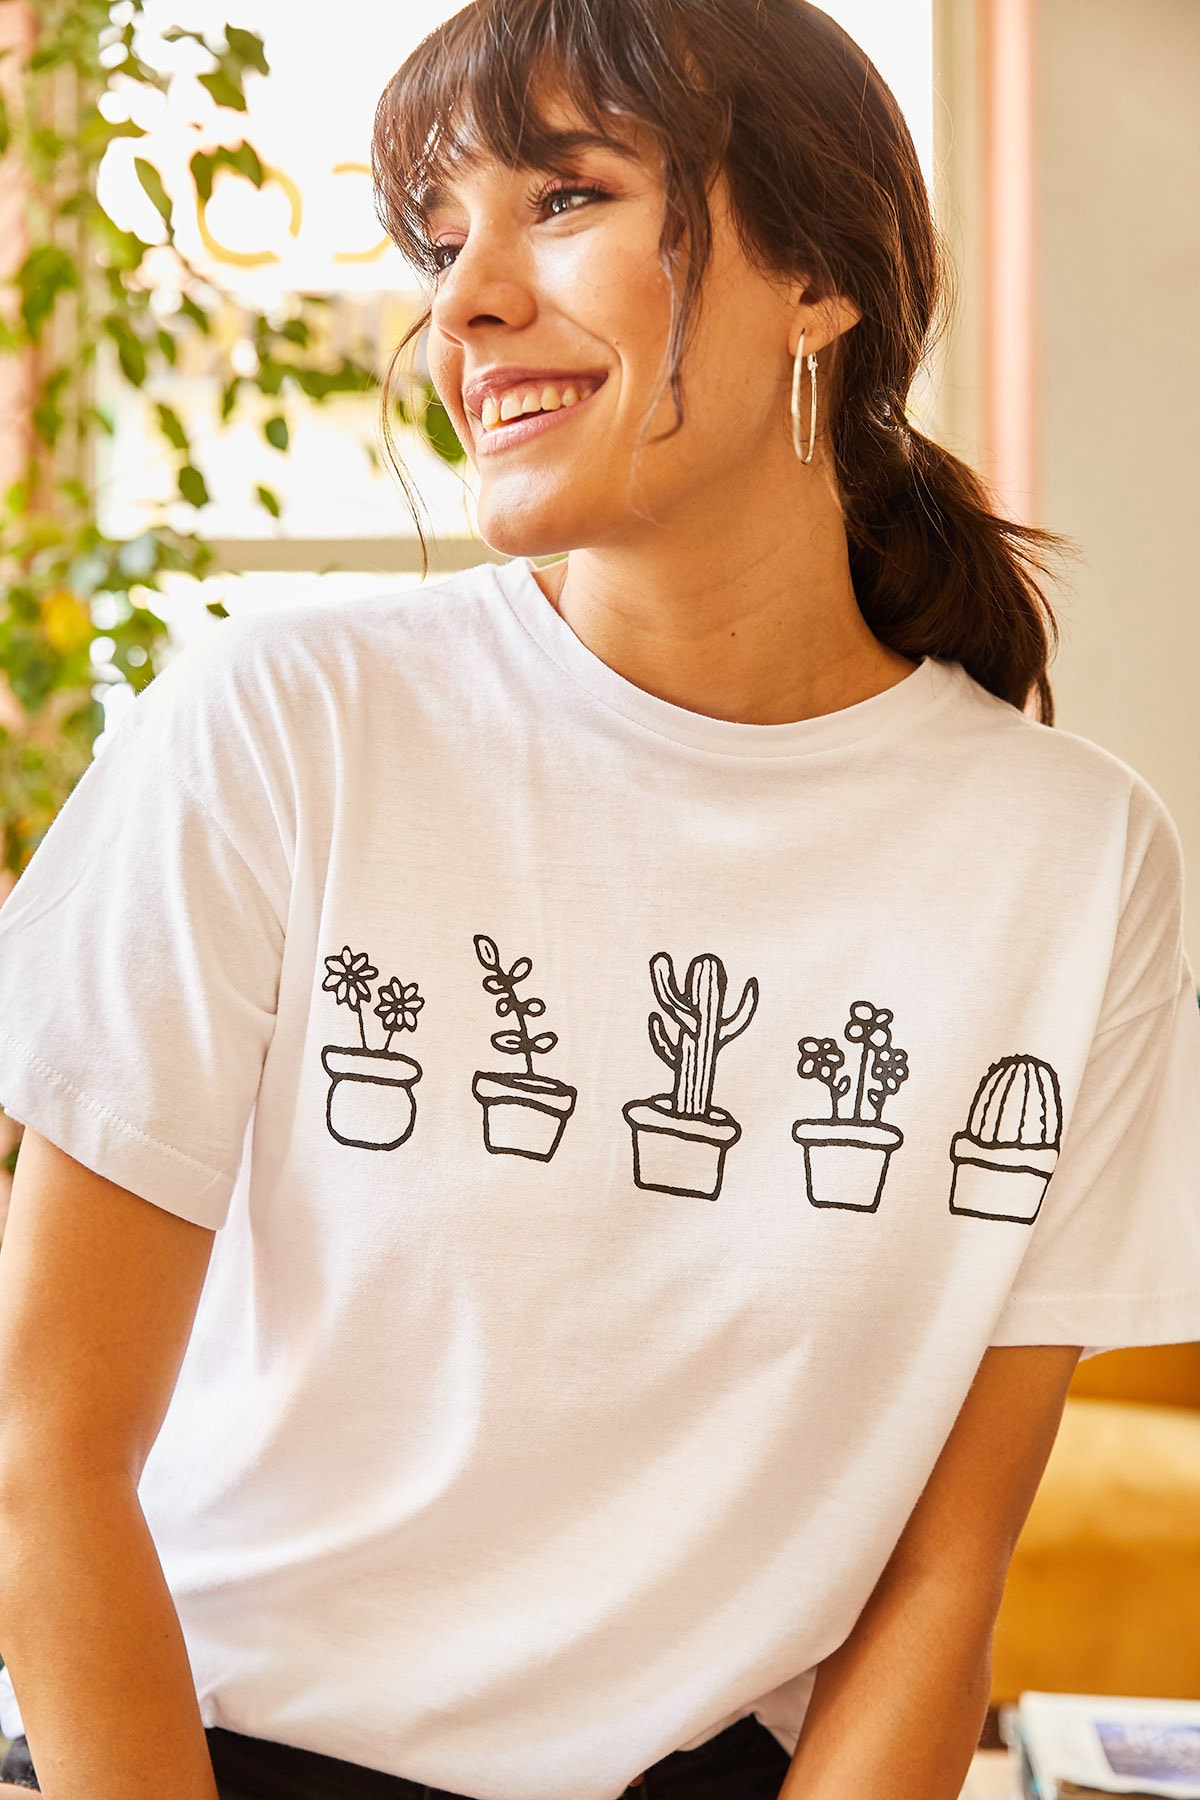 Olalook Women's White Cactus Printed T-shirt